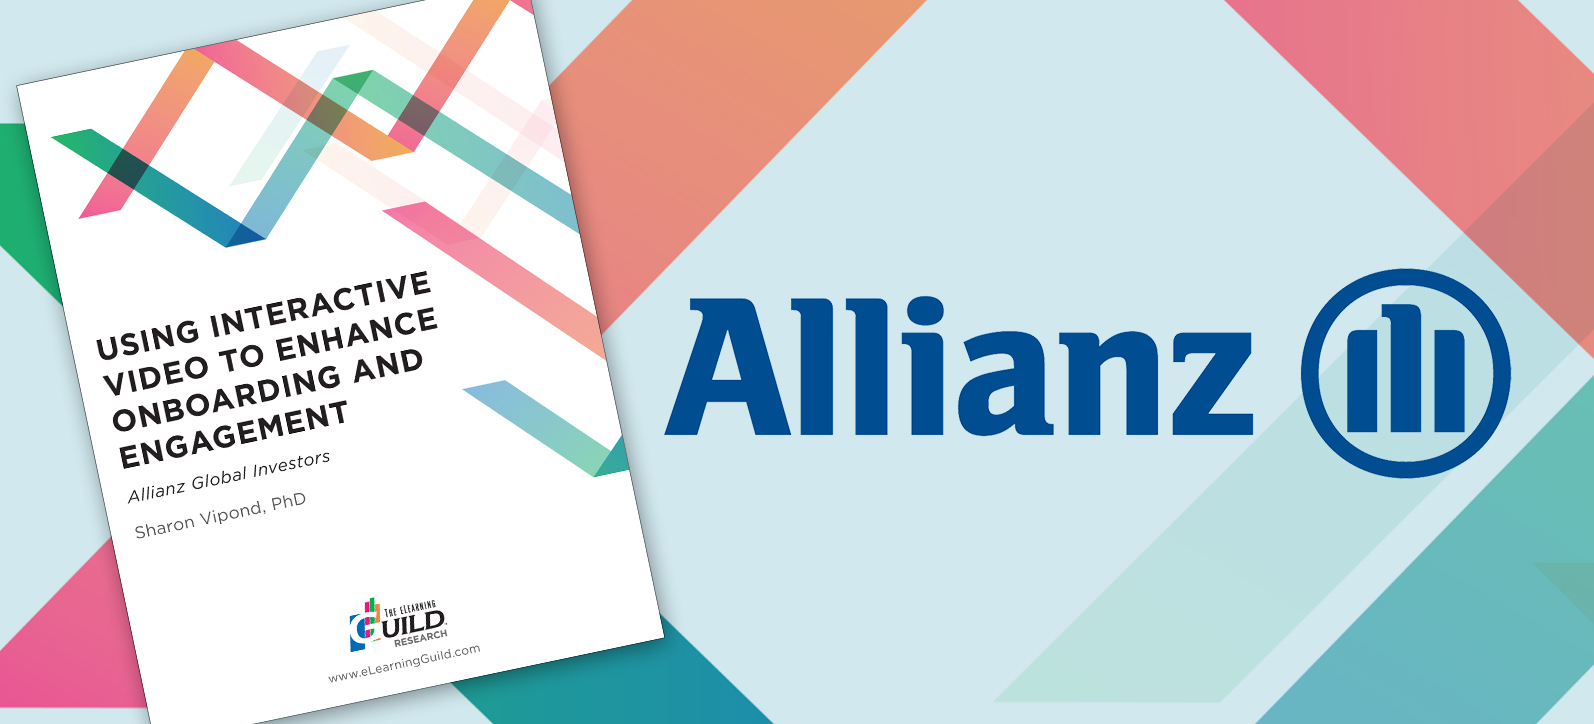 Allianz-eLearning-Case-Study